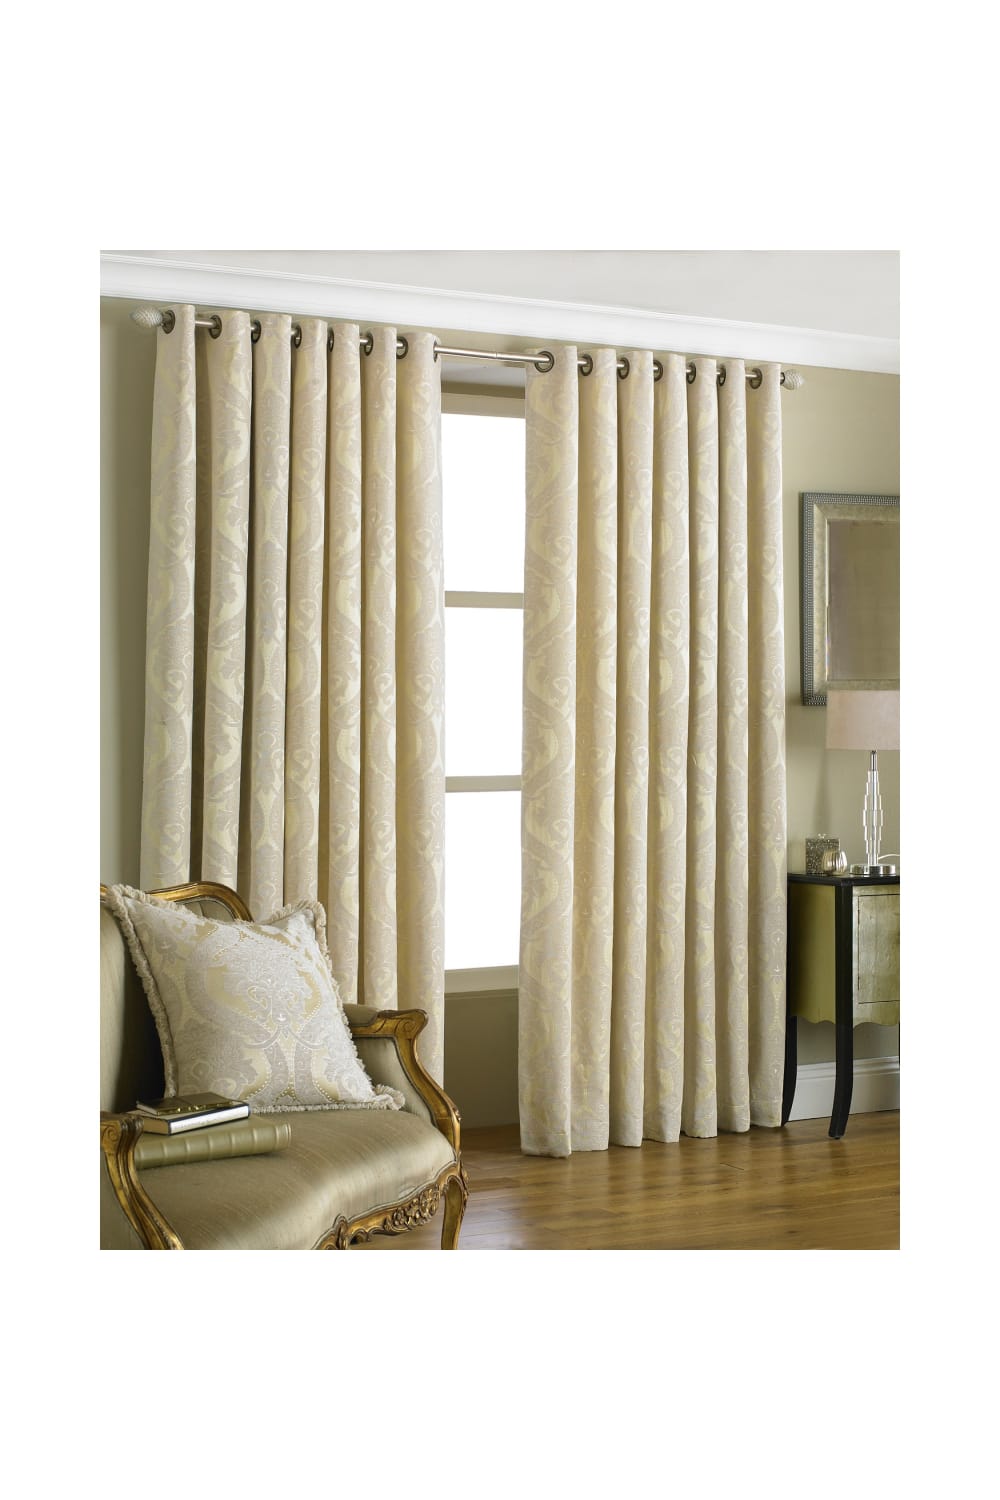 Riva Home Renaissance Ringtop Curtains (Cream) (90 x 90 inch)